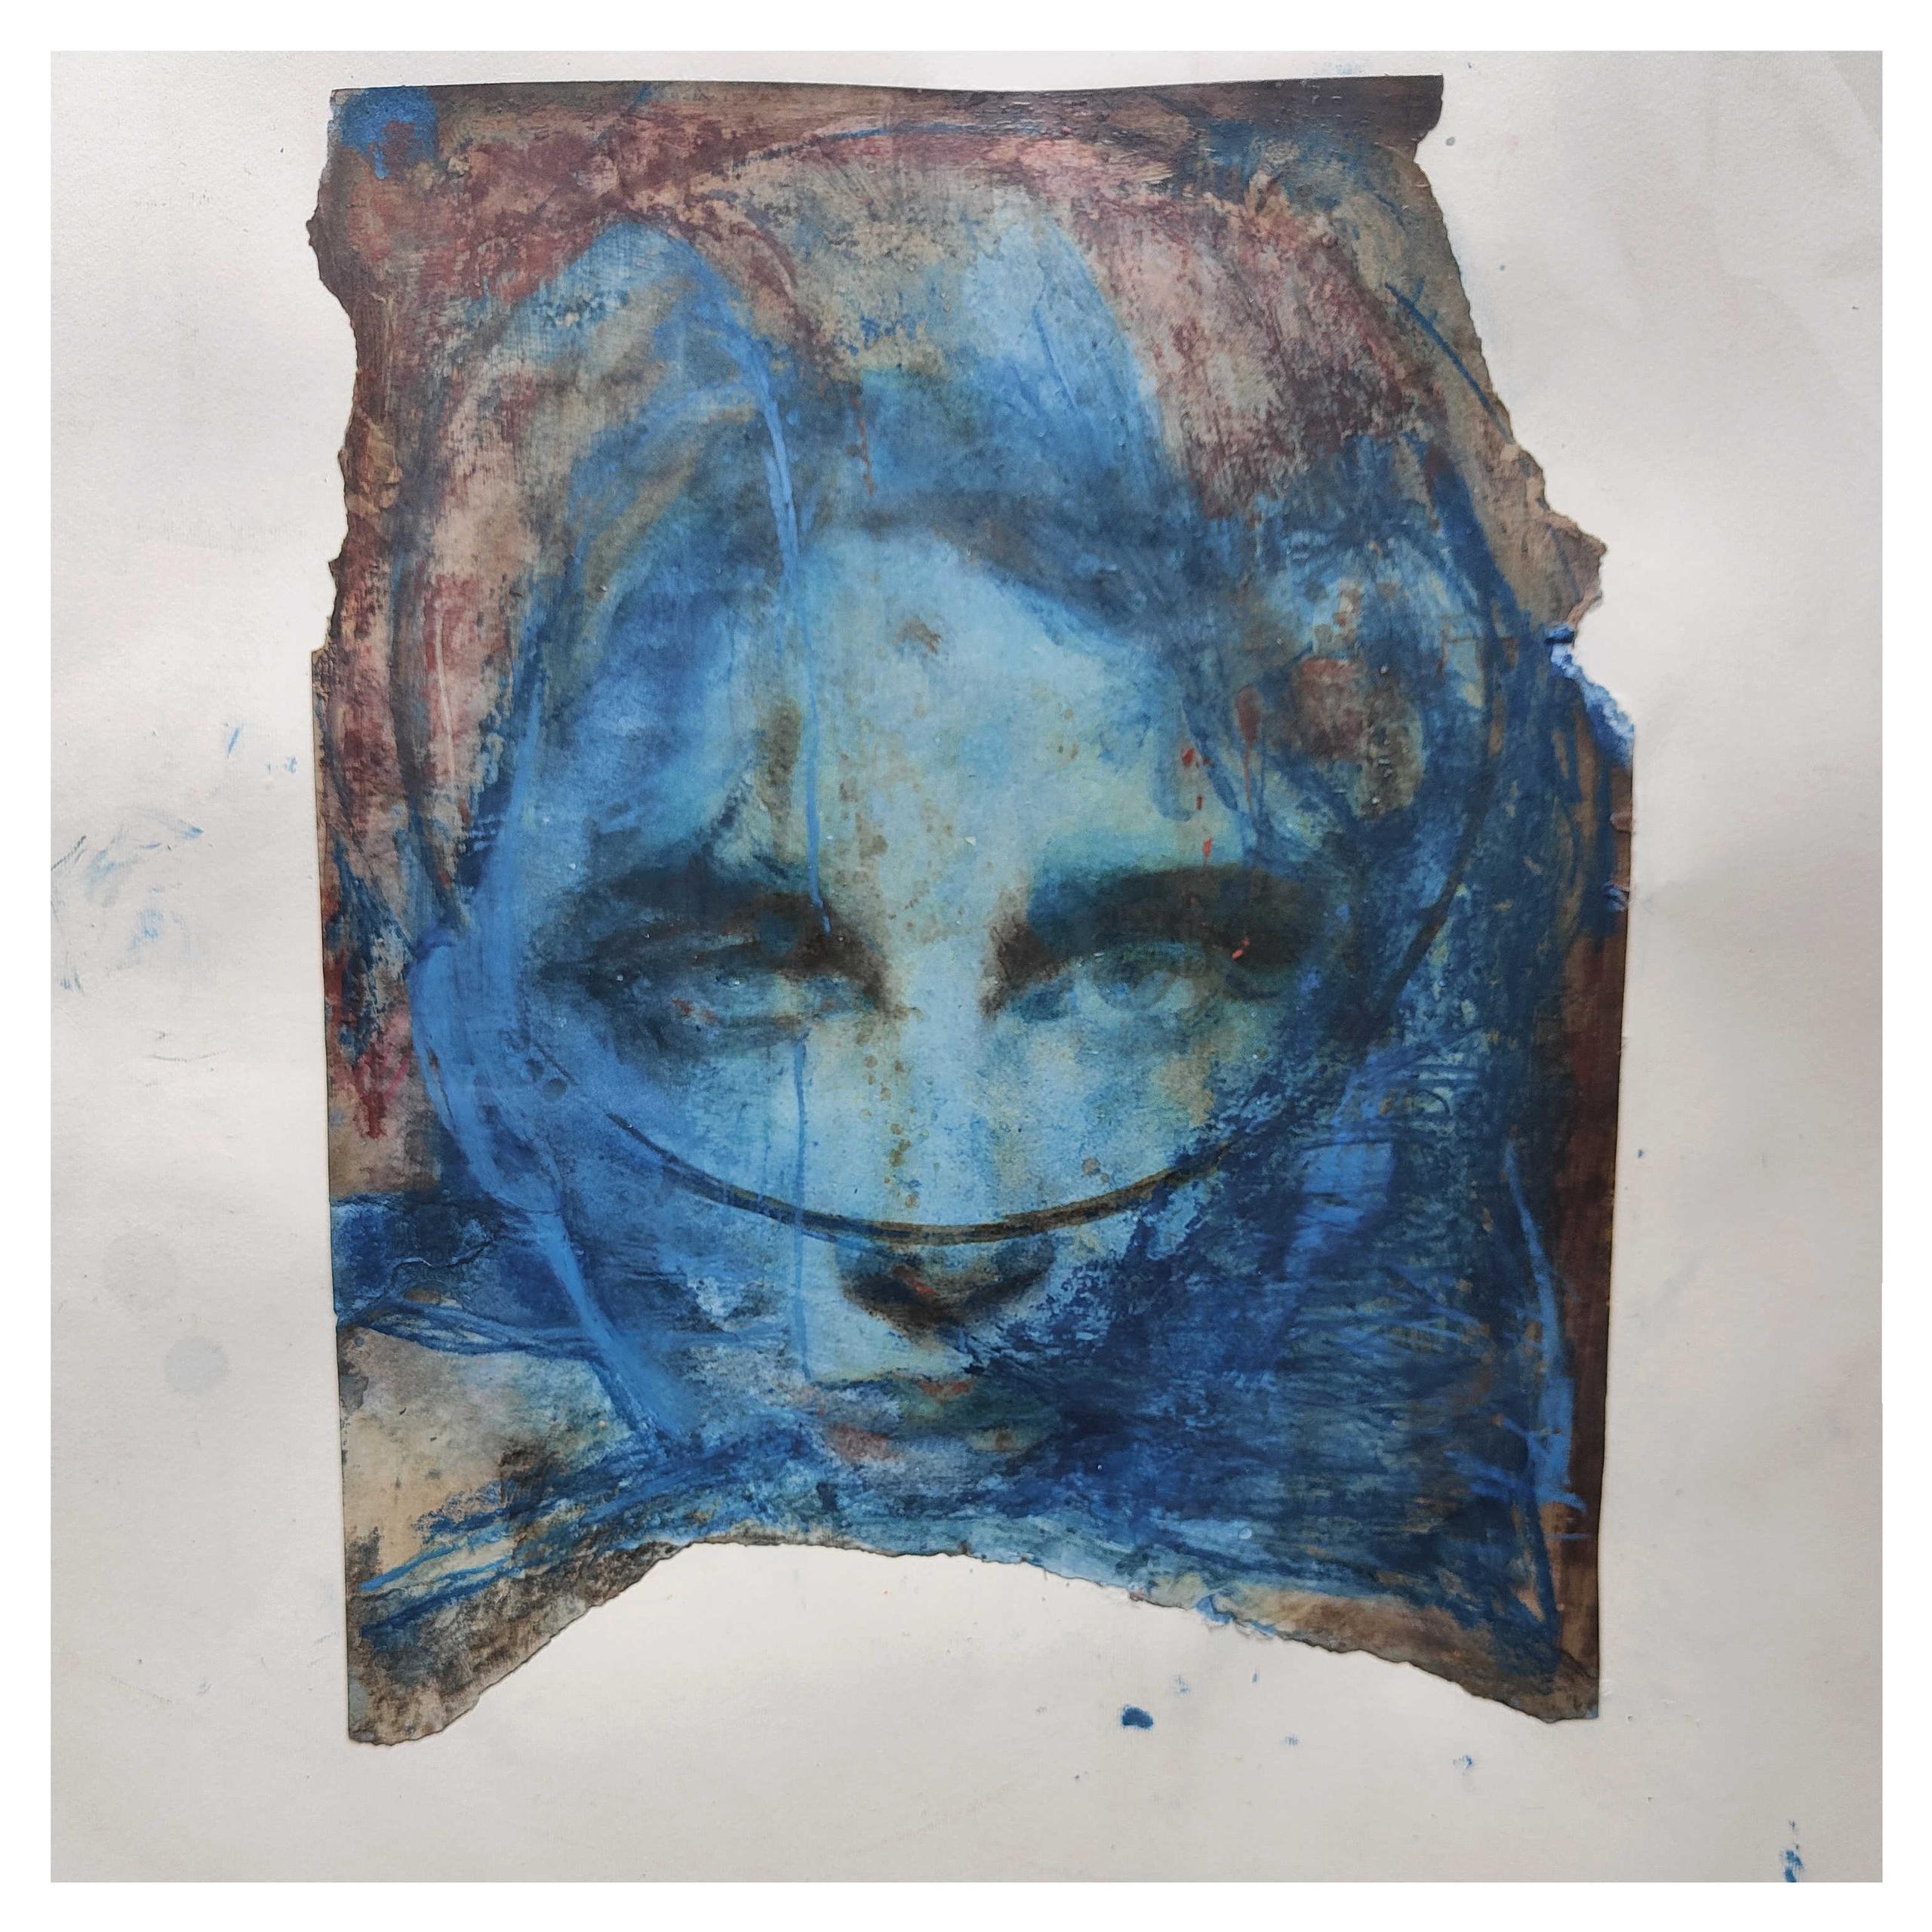 Velluto blu, disegno su carta, pastelli olio, Simona Fedele artista, Italy, disegno, pastelli ad olio, carboncino, studio d'artista